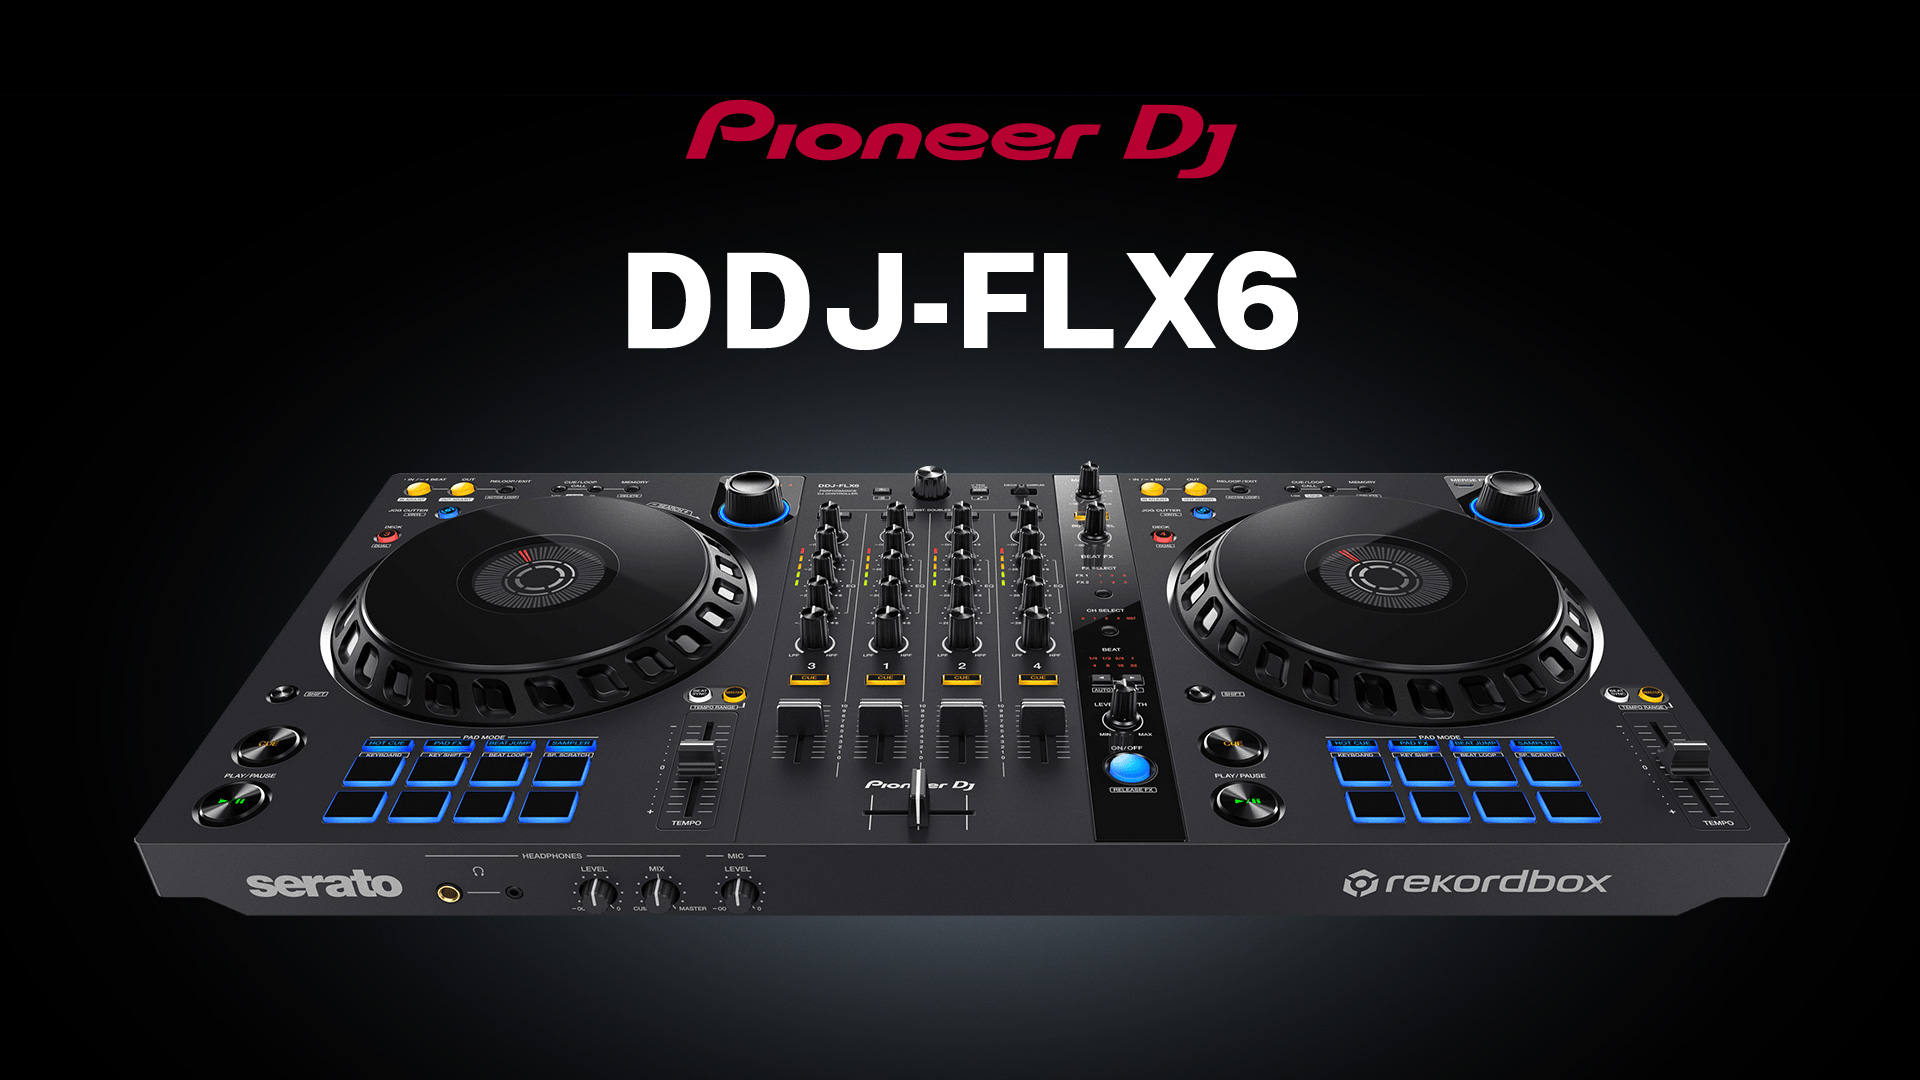 DDJ-FLX6